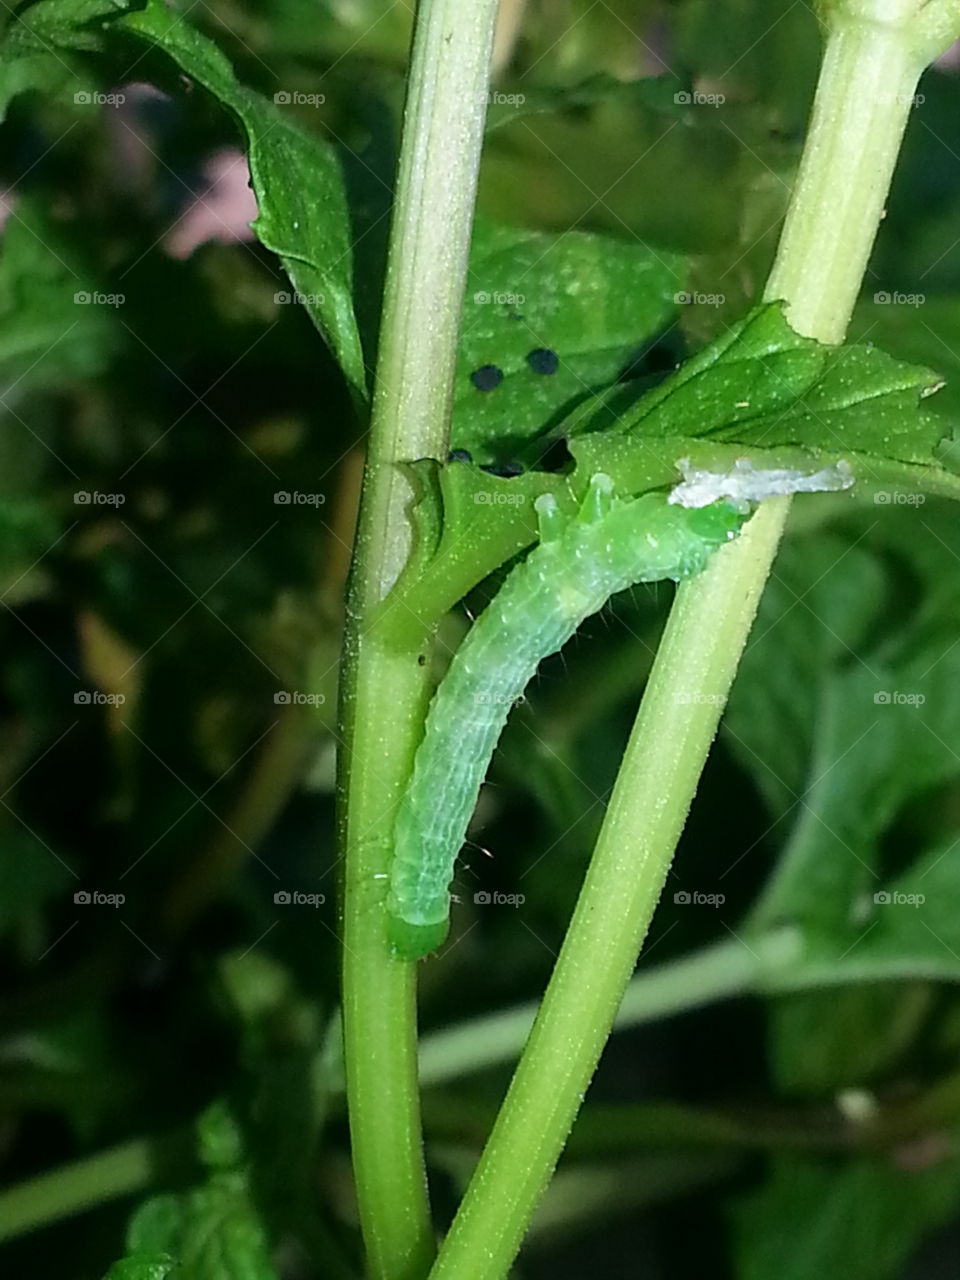 green caterpillar on my mint plant